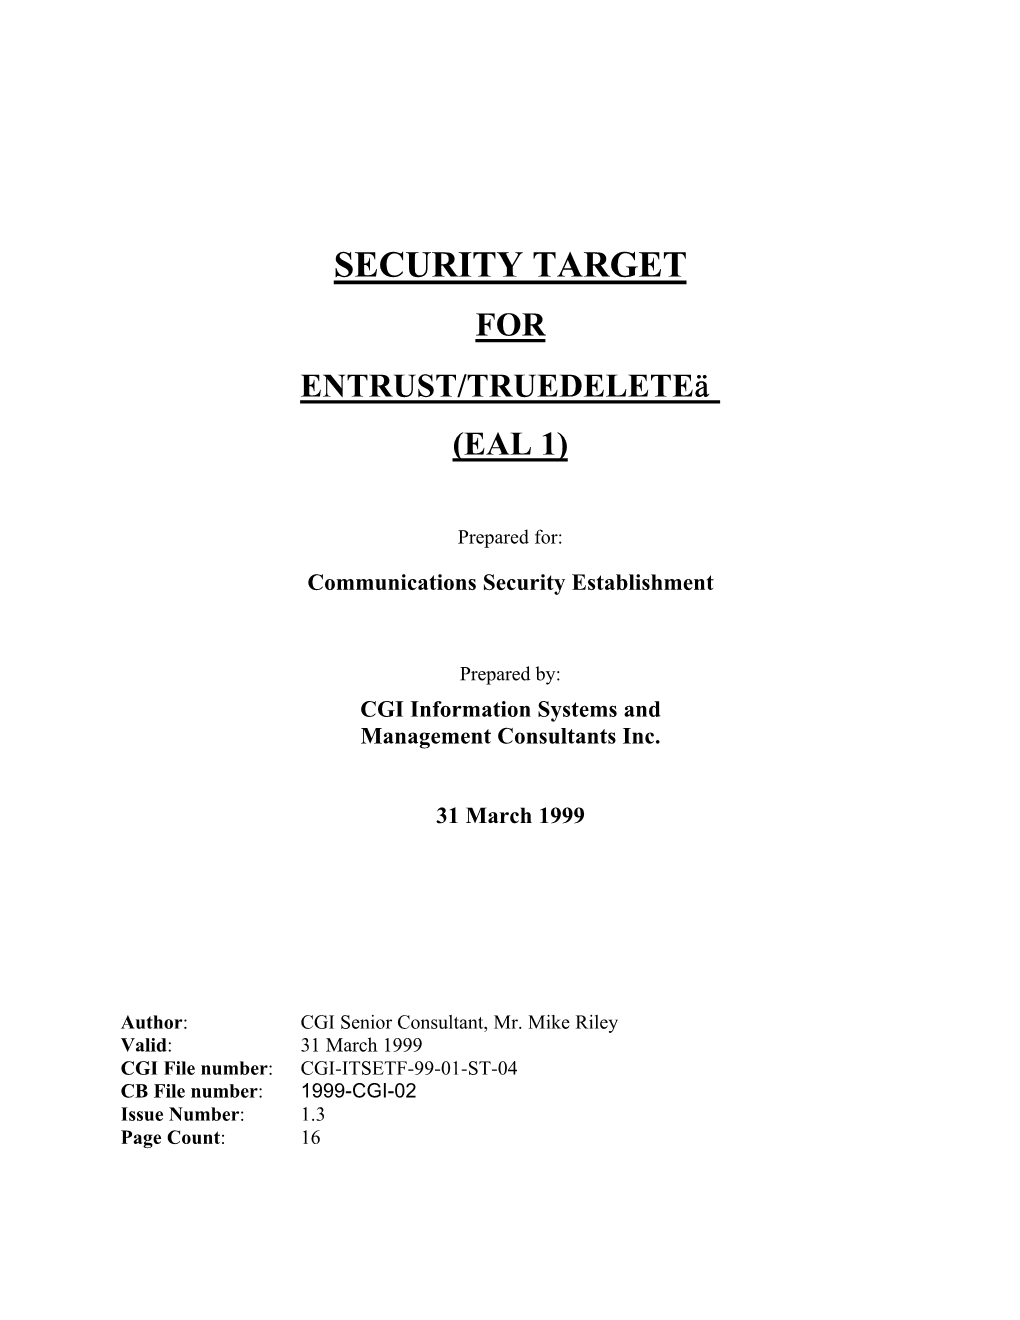 Security Target for Entrust/Truedeleteä (Eal 1)